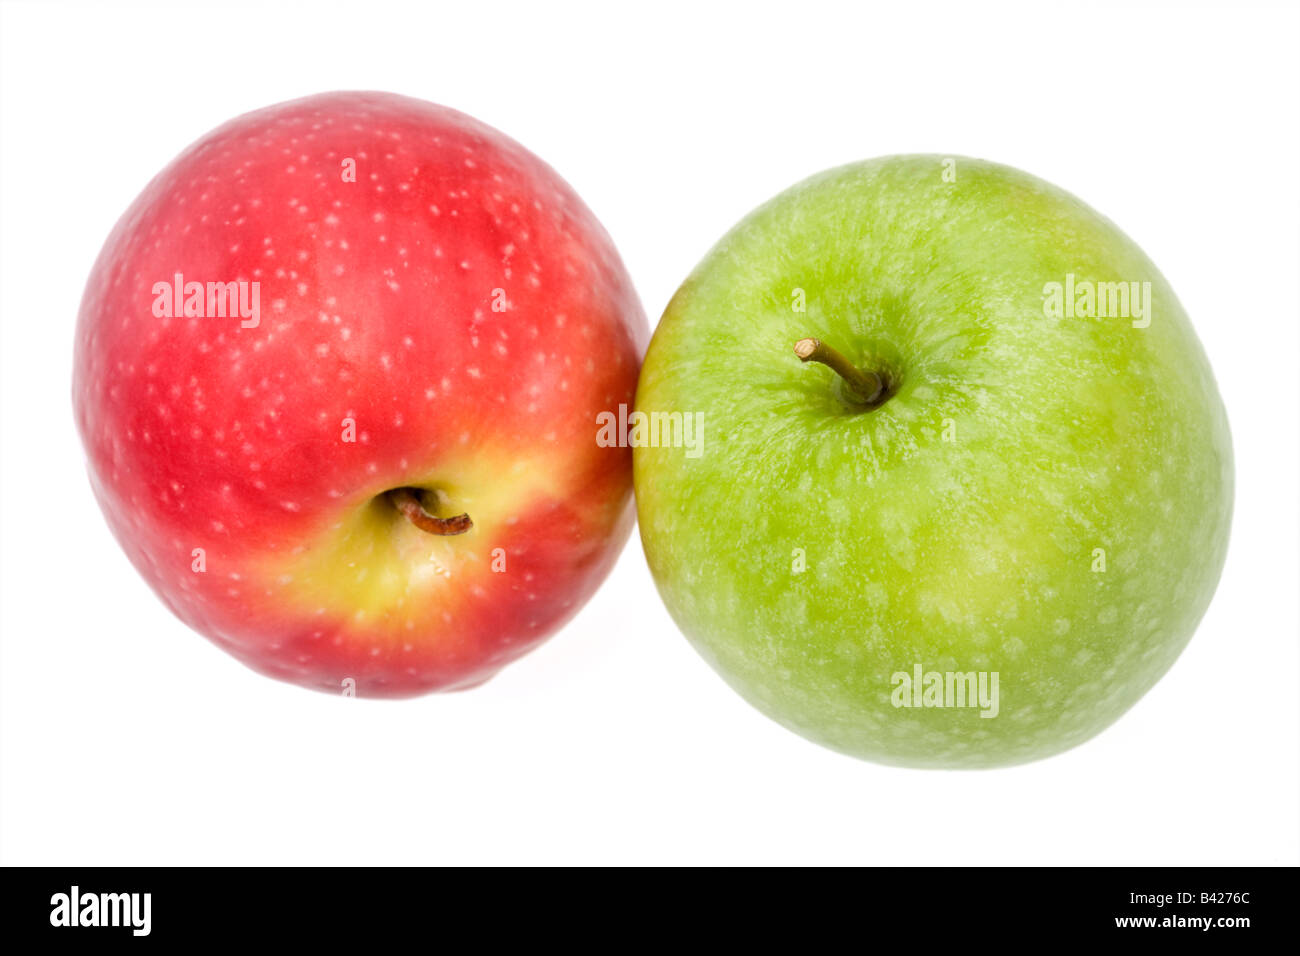 https://c8.alamy.com/comp/B4276C/granny-smith-and-pink-lady-apples-B4276C.jpg